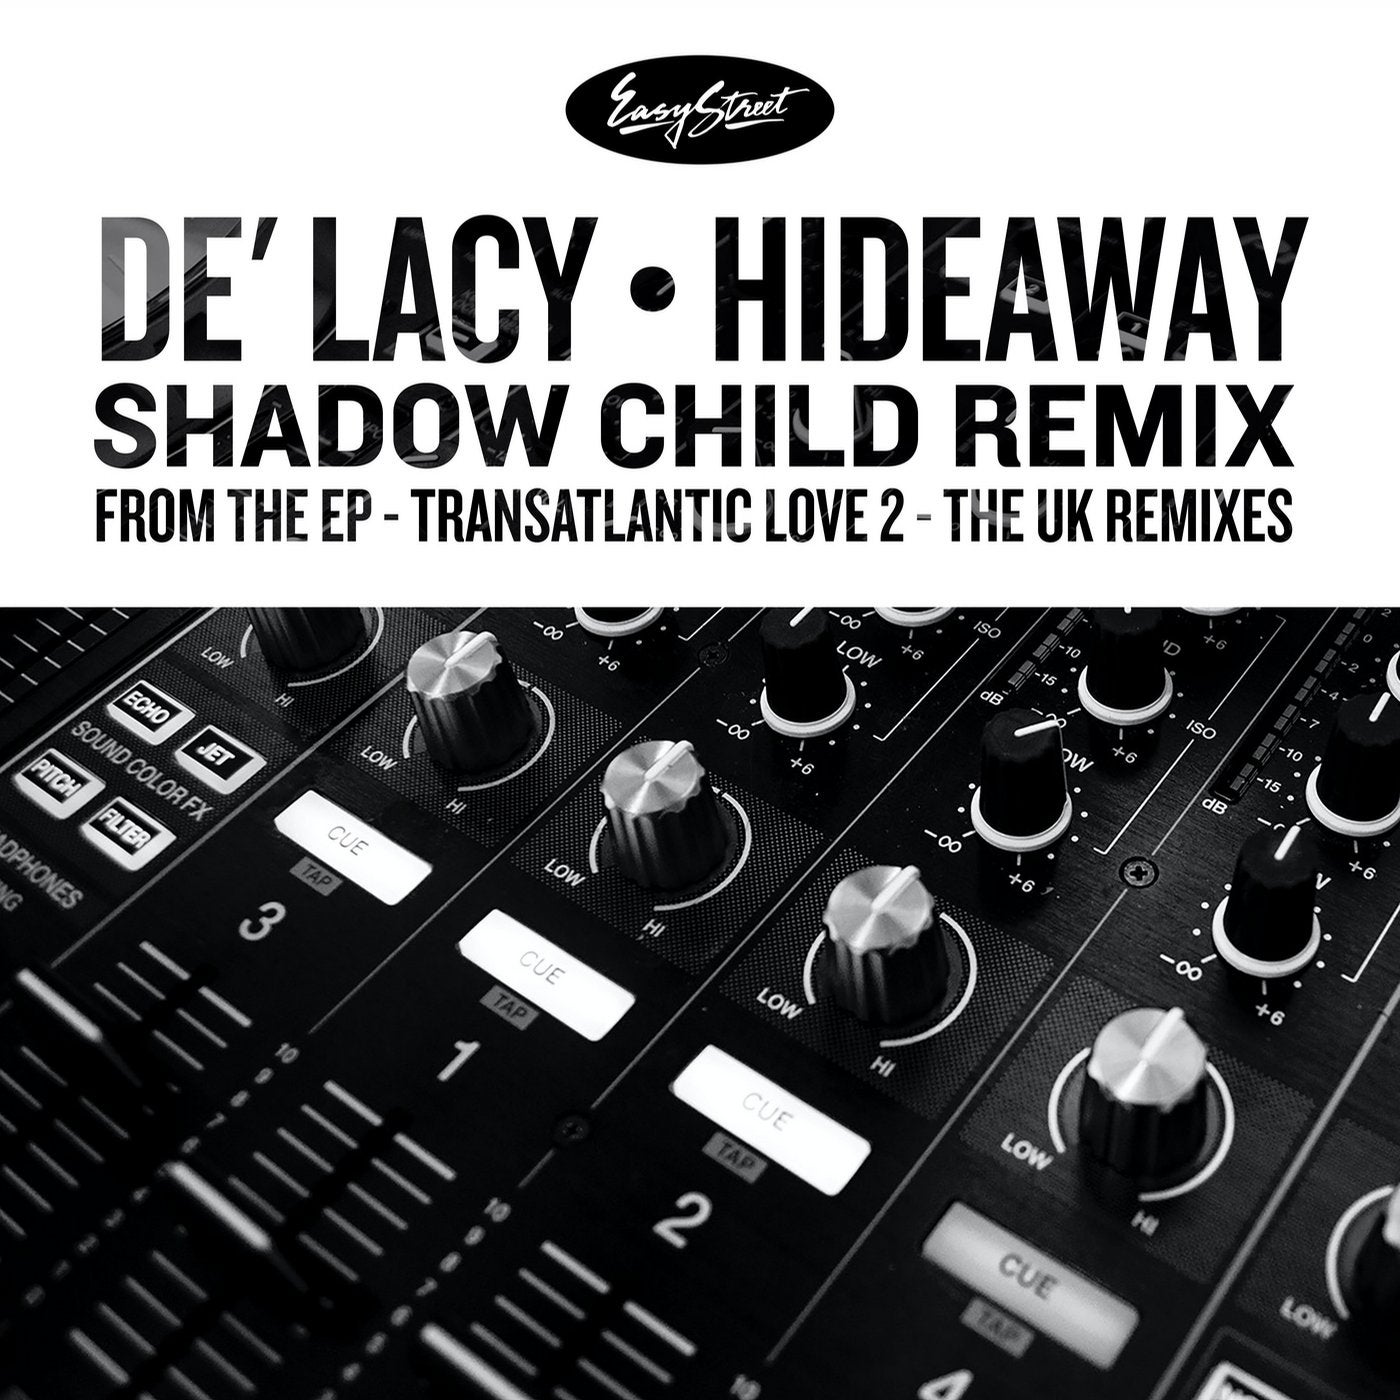 Hideaway (Shadow Child Remix)